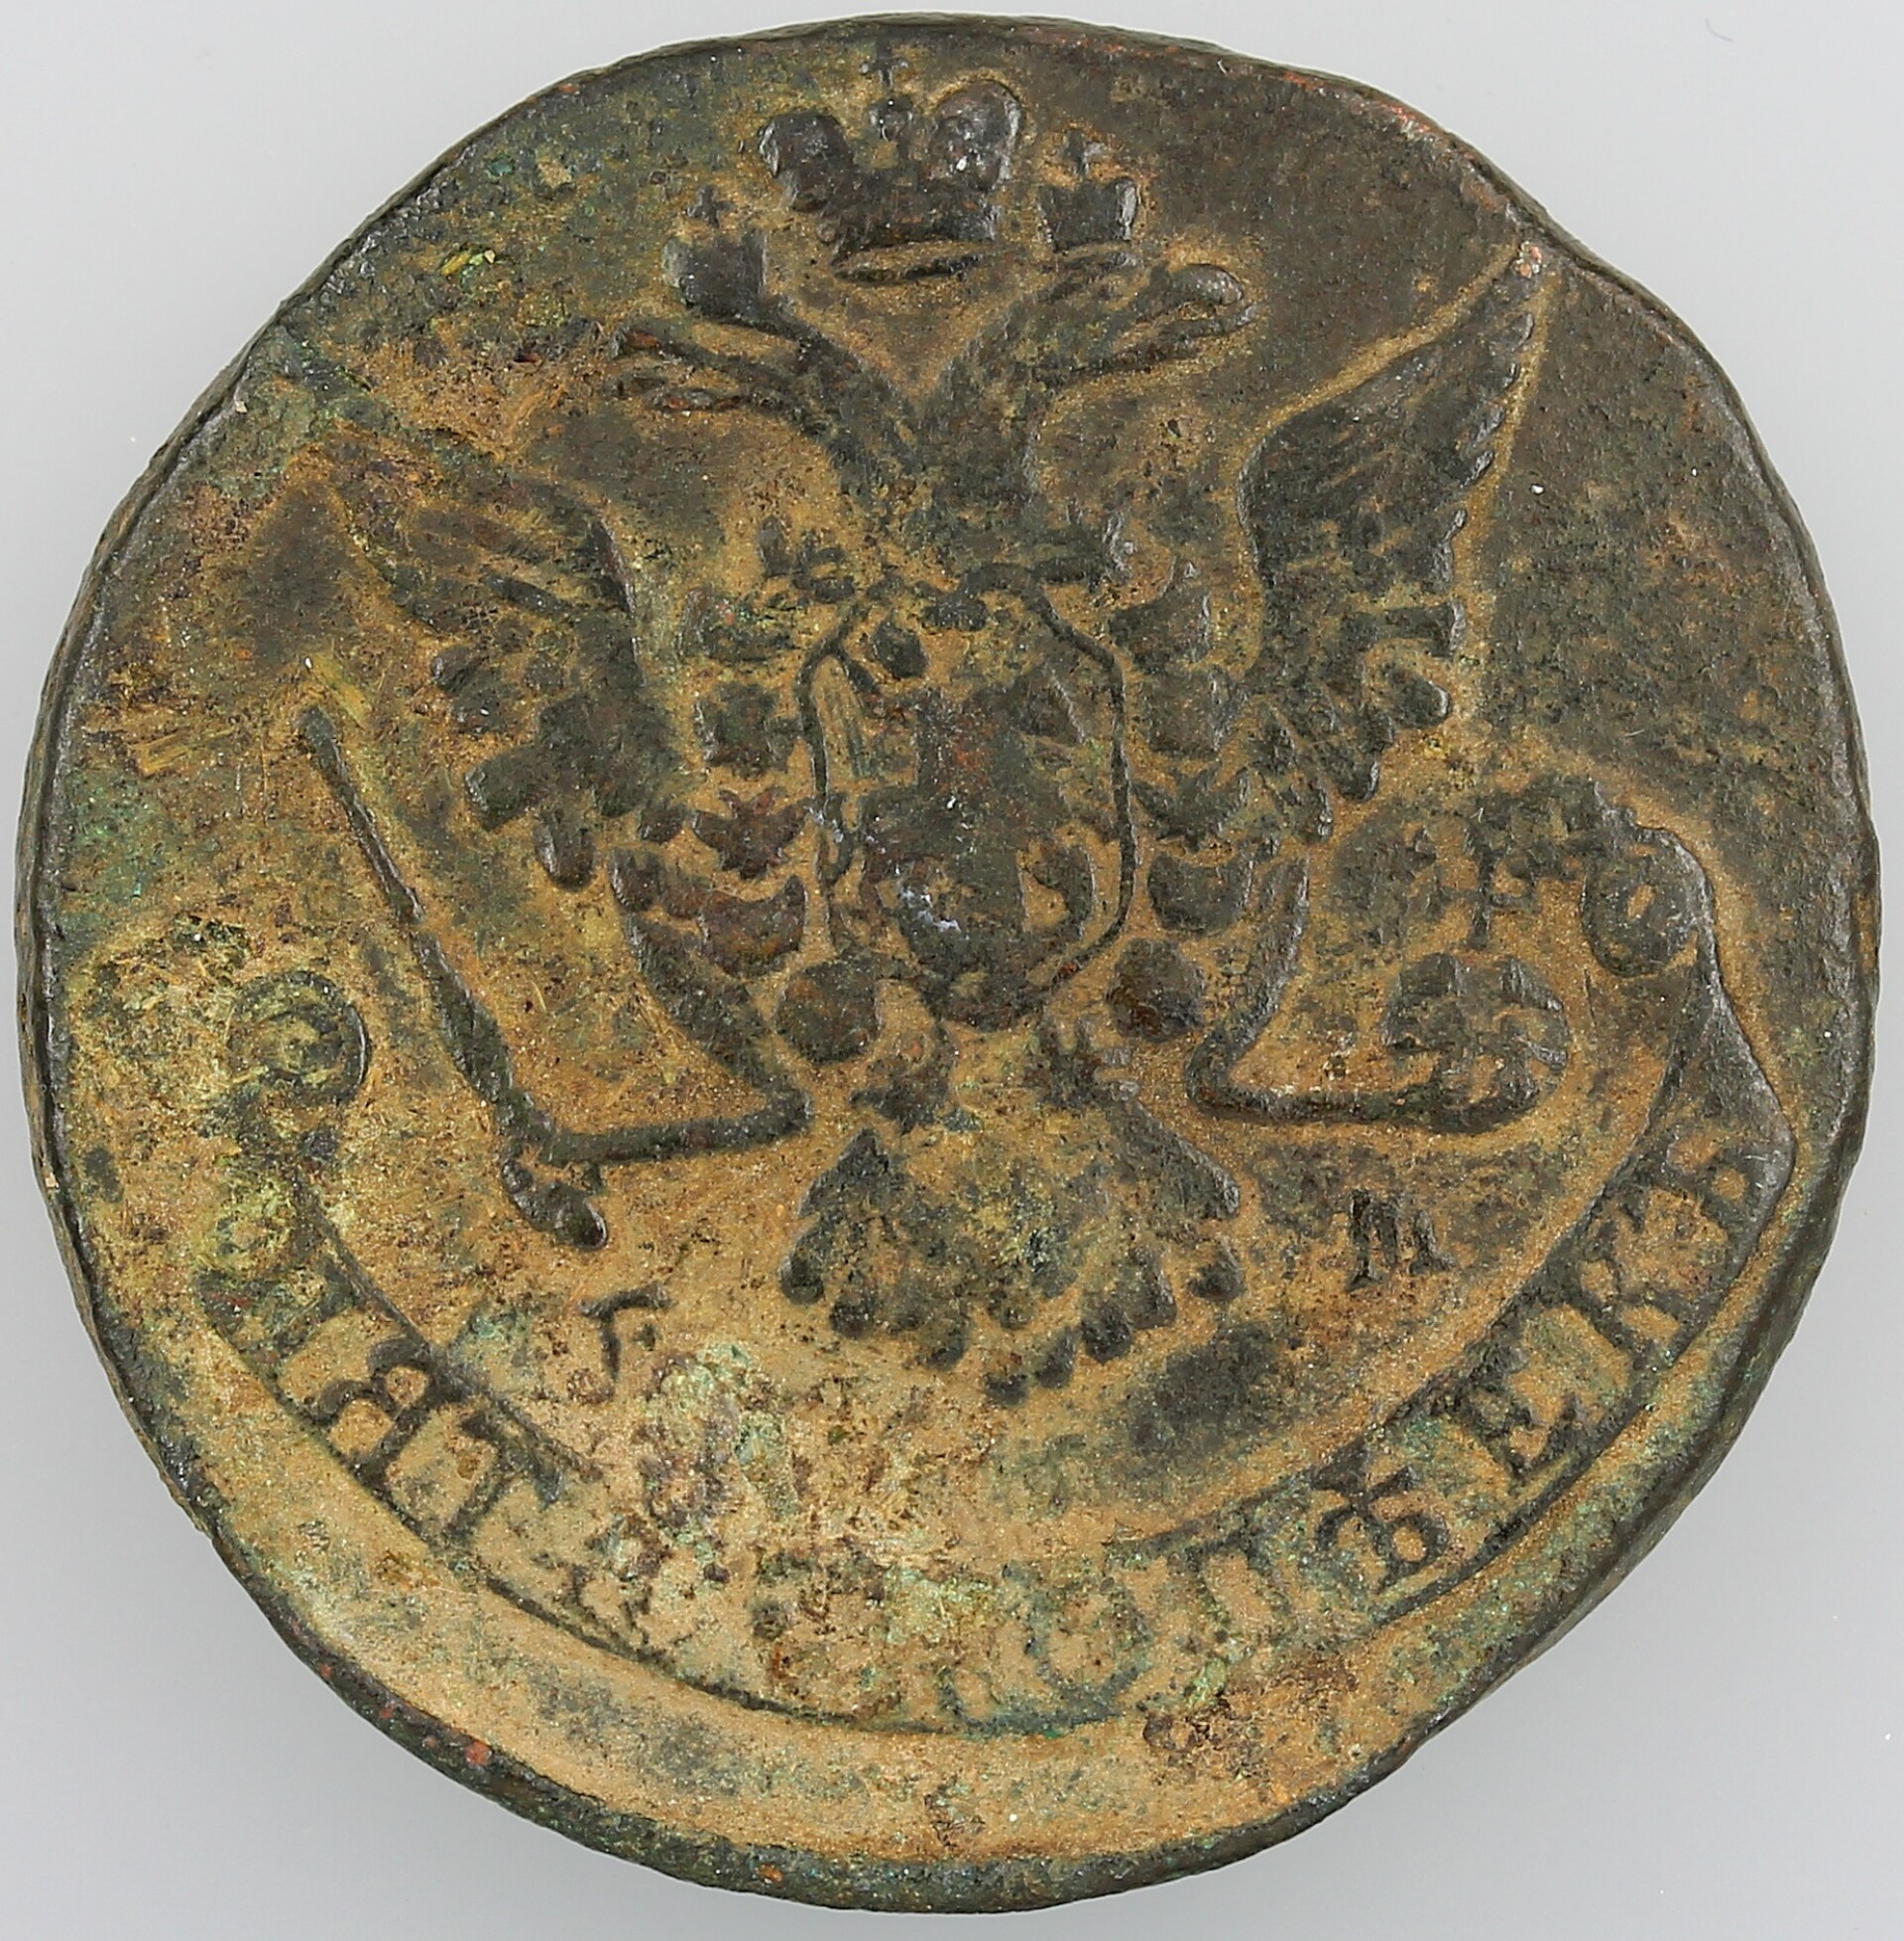 Münze Russland 1773 (Dr. Kremer CC BY-NC-SA)